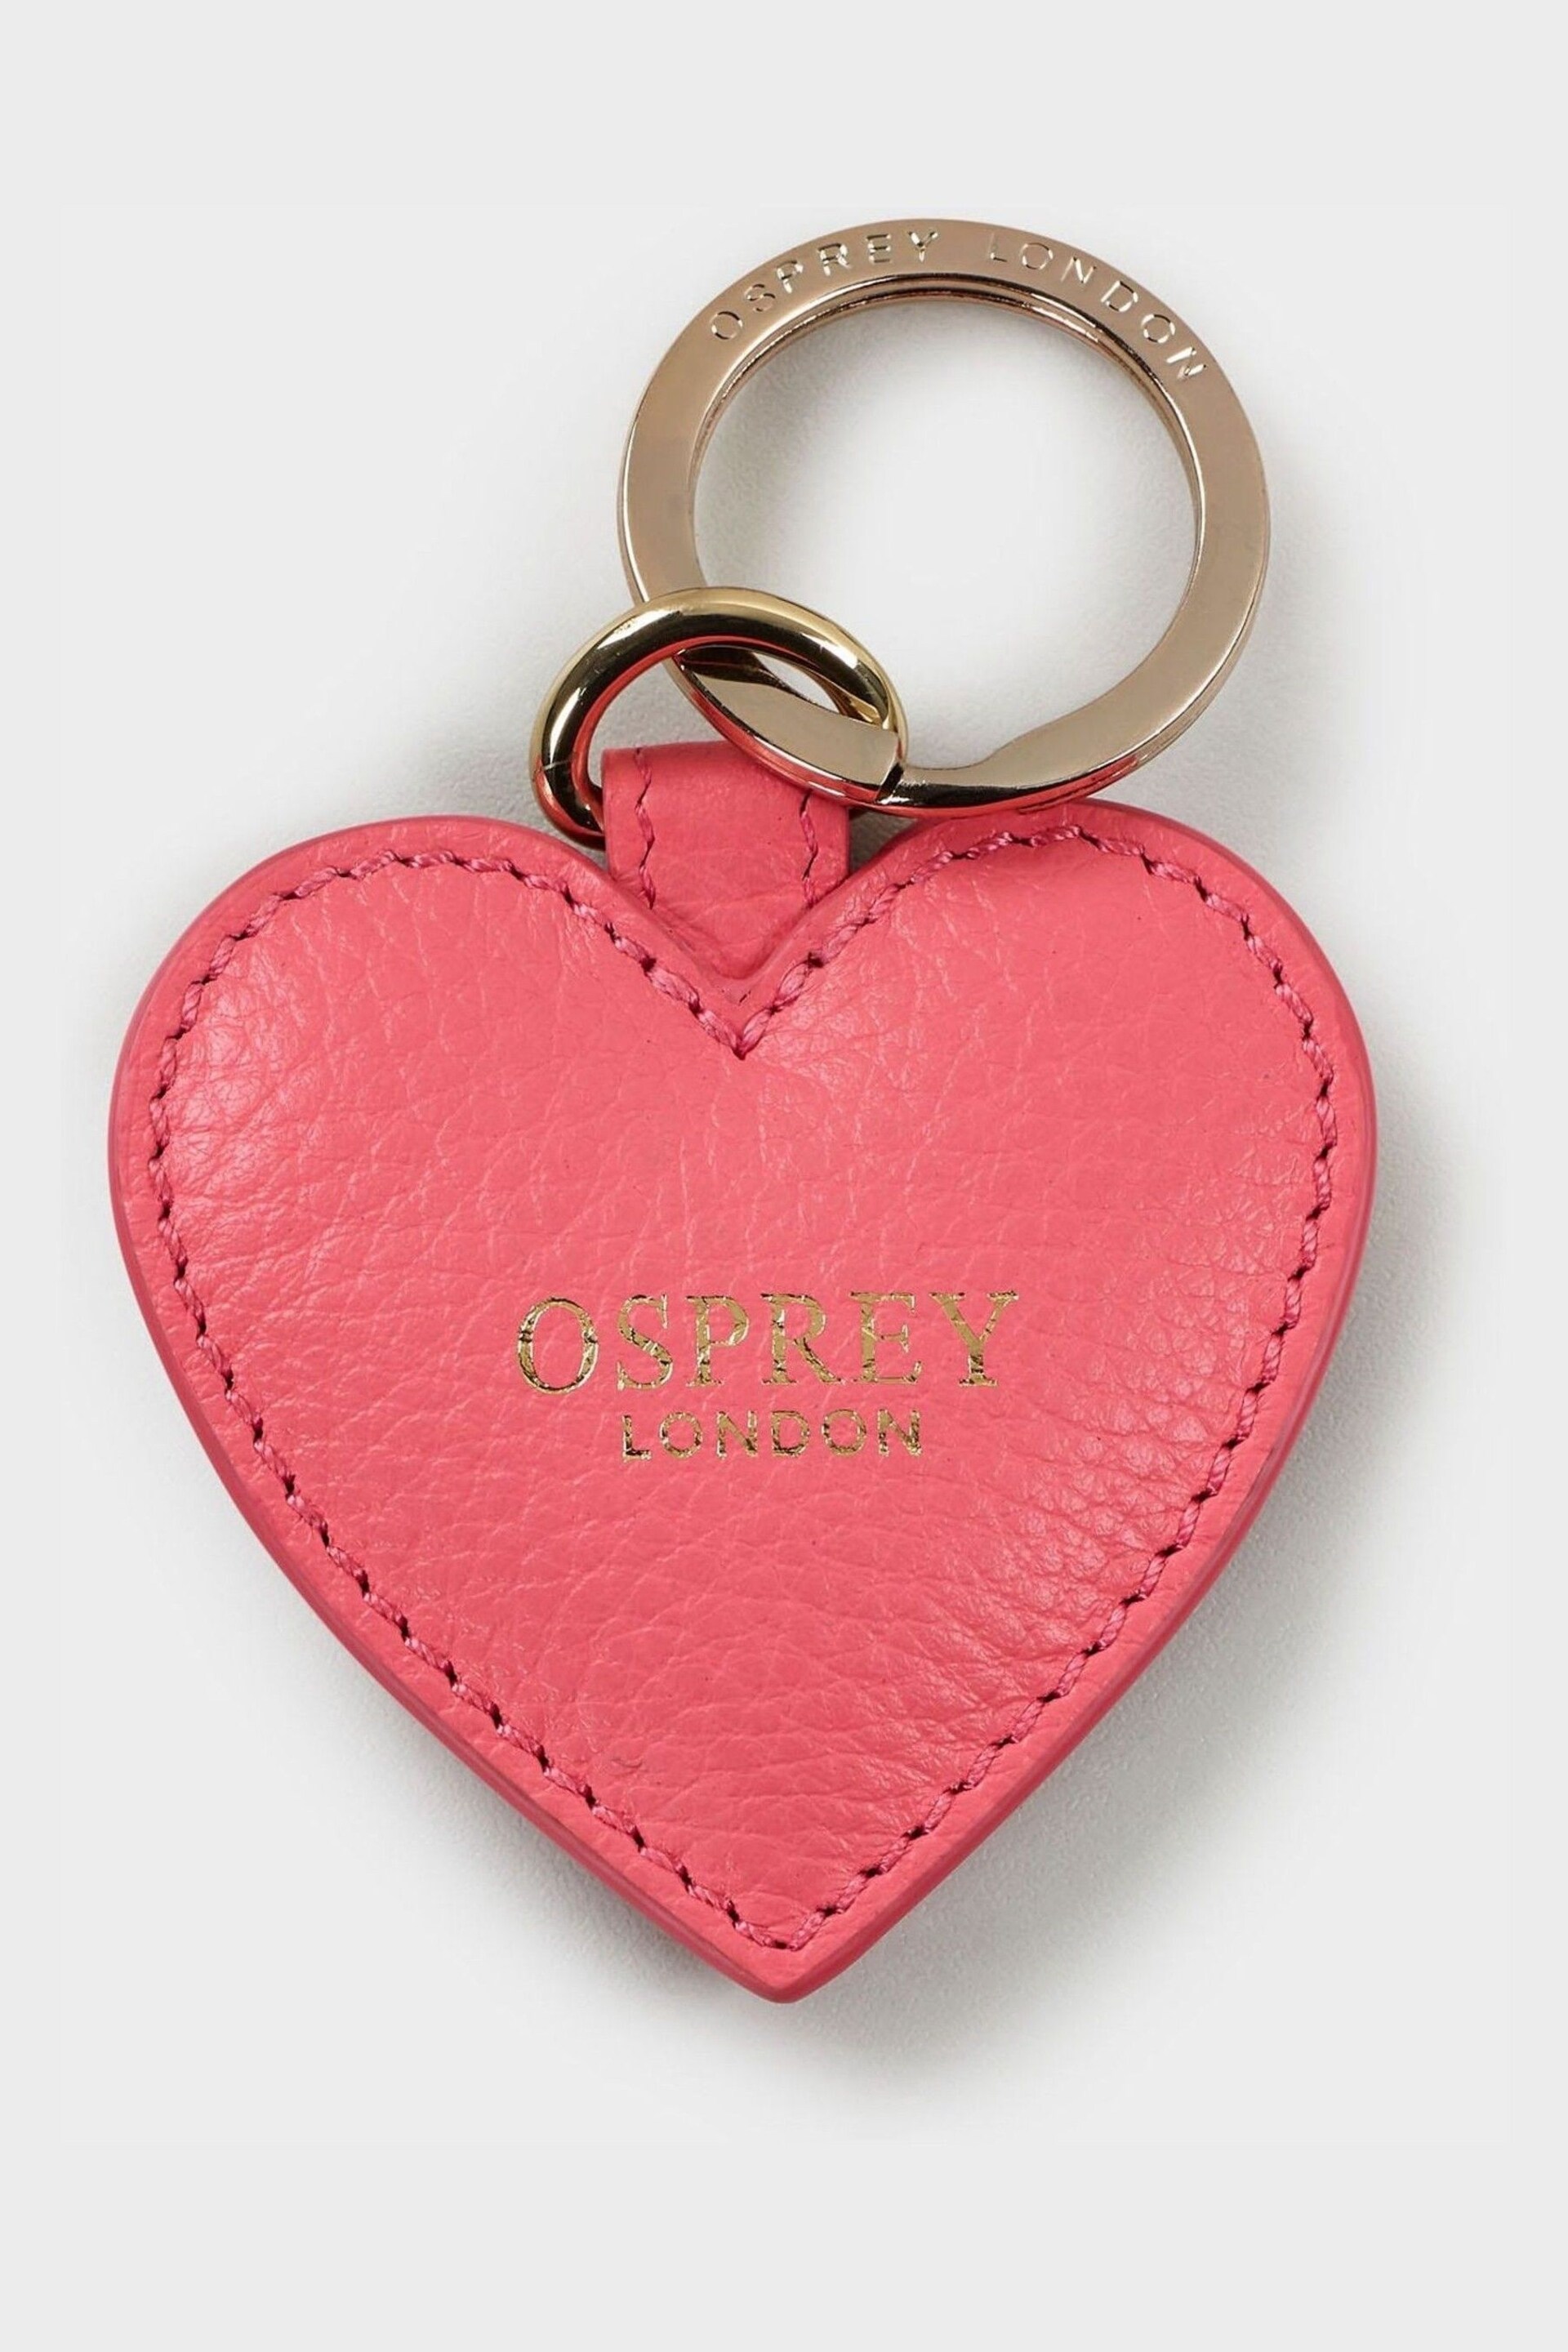 OSPREY LONDON The Tilly Heart Leather Trinket and Keyring Gift Set - Image 3 of 5